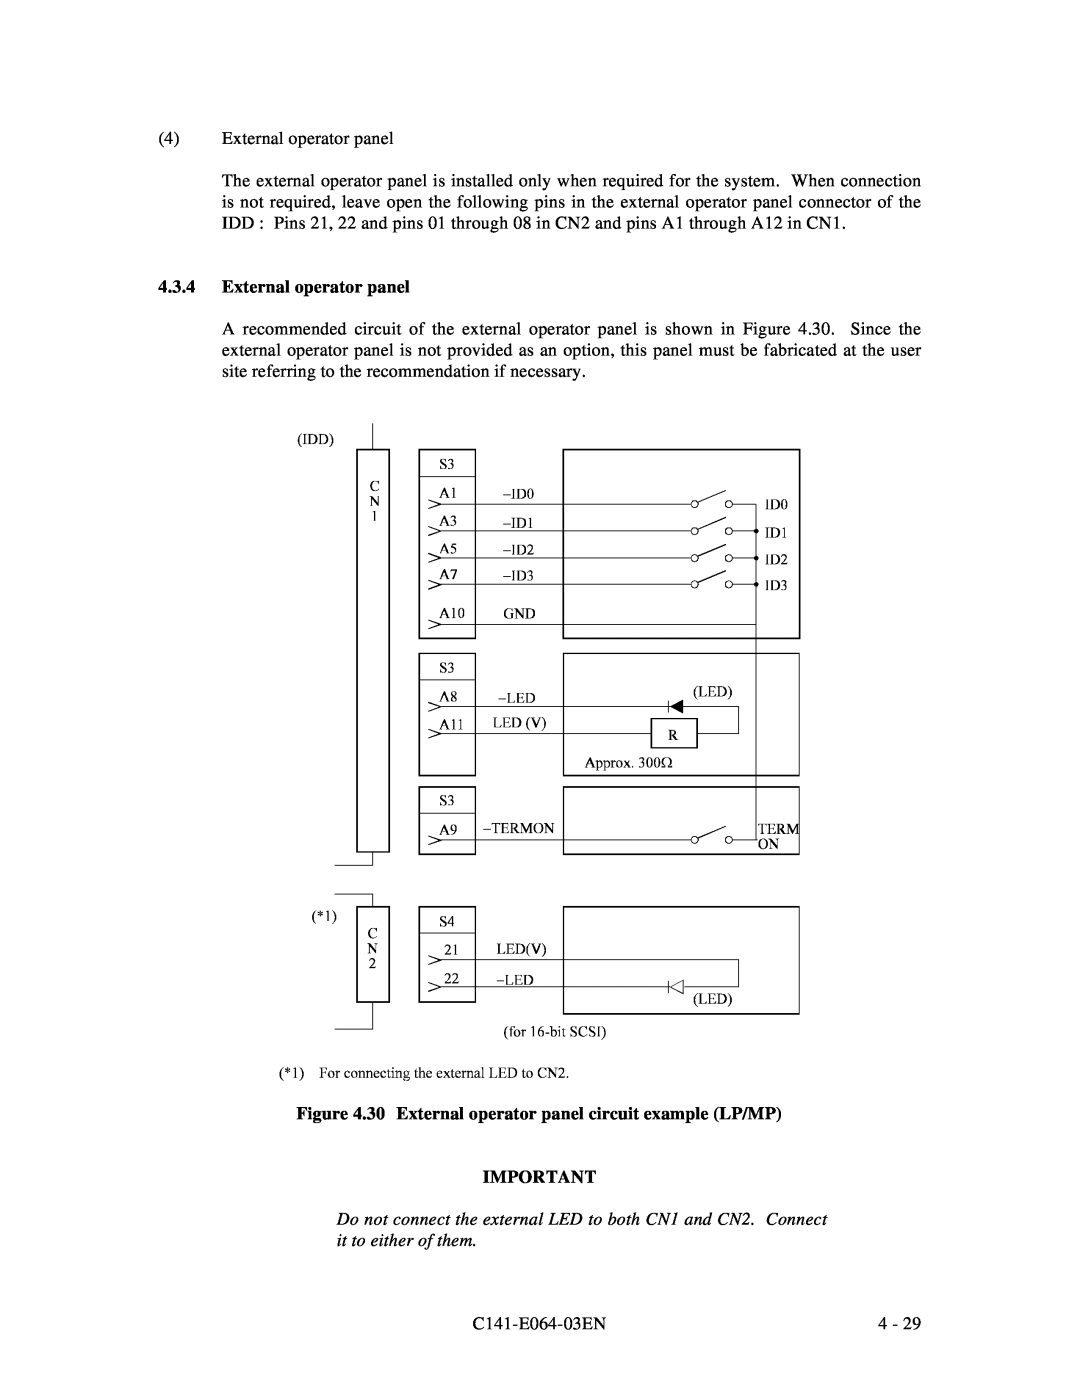 Fujitsu MAG3182LC, MAF3364LP, MAF3364LC, MAE3182LC, MAE3091LC manual 30 External operator panel circuit example LP/MP 